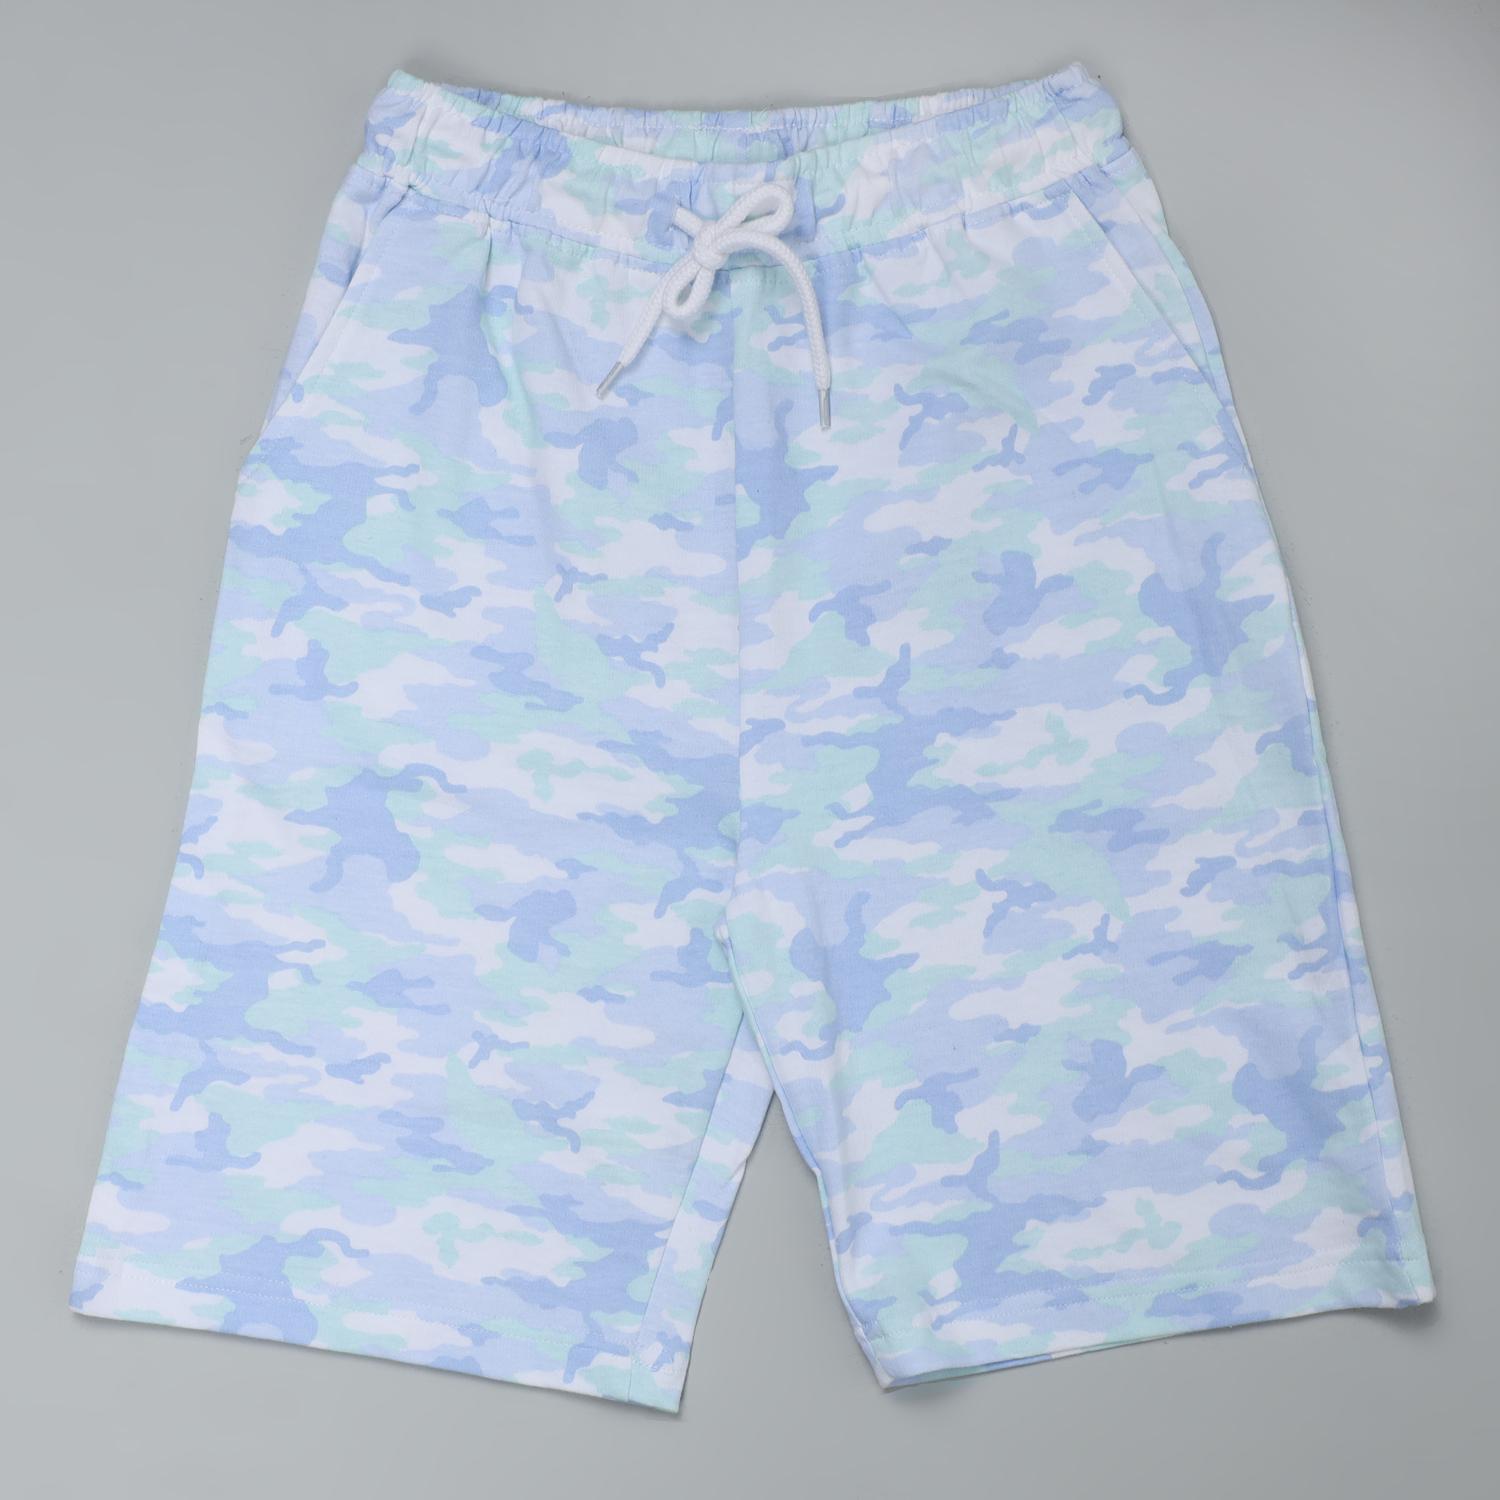 Clothing Boys Pattern Shorts-White/Blue Printed